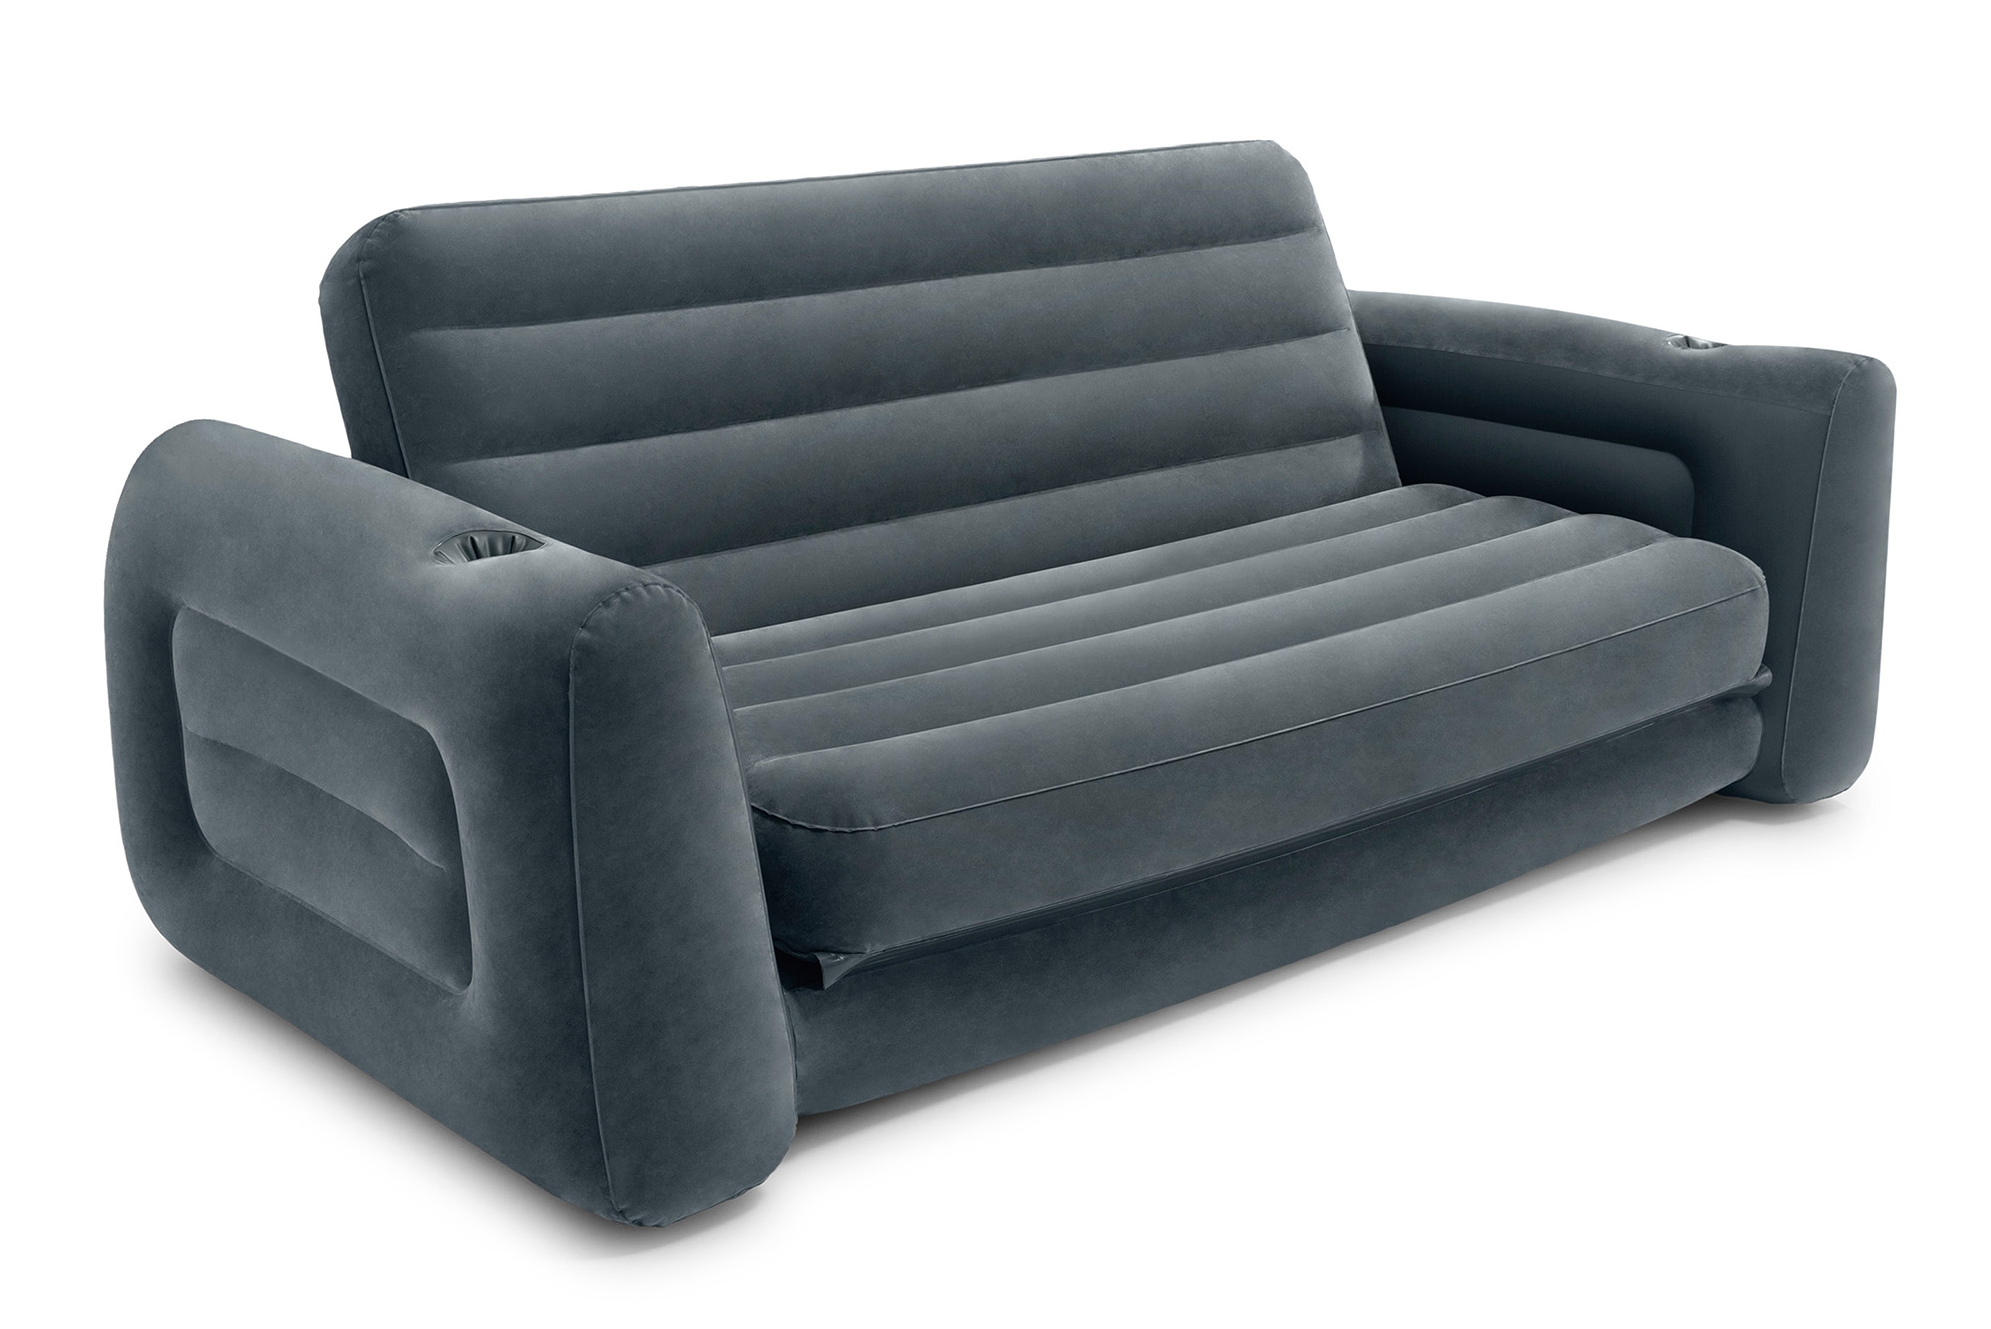 Intex inflatable sofa